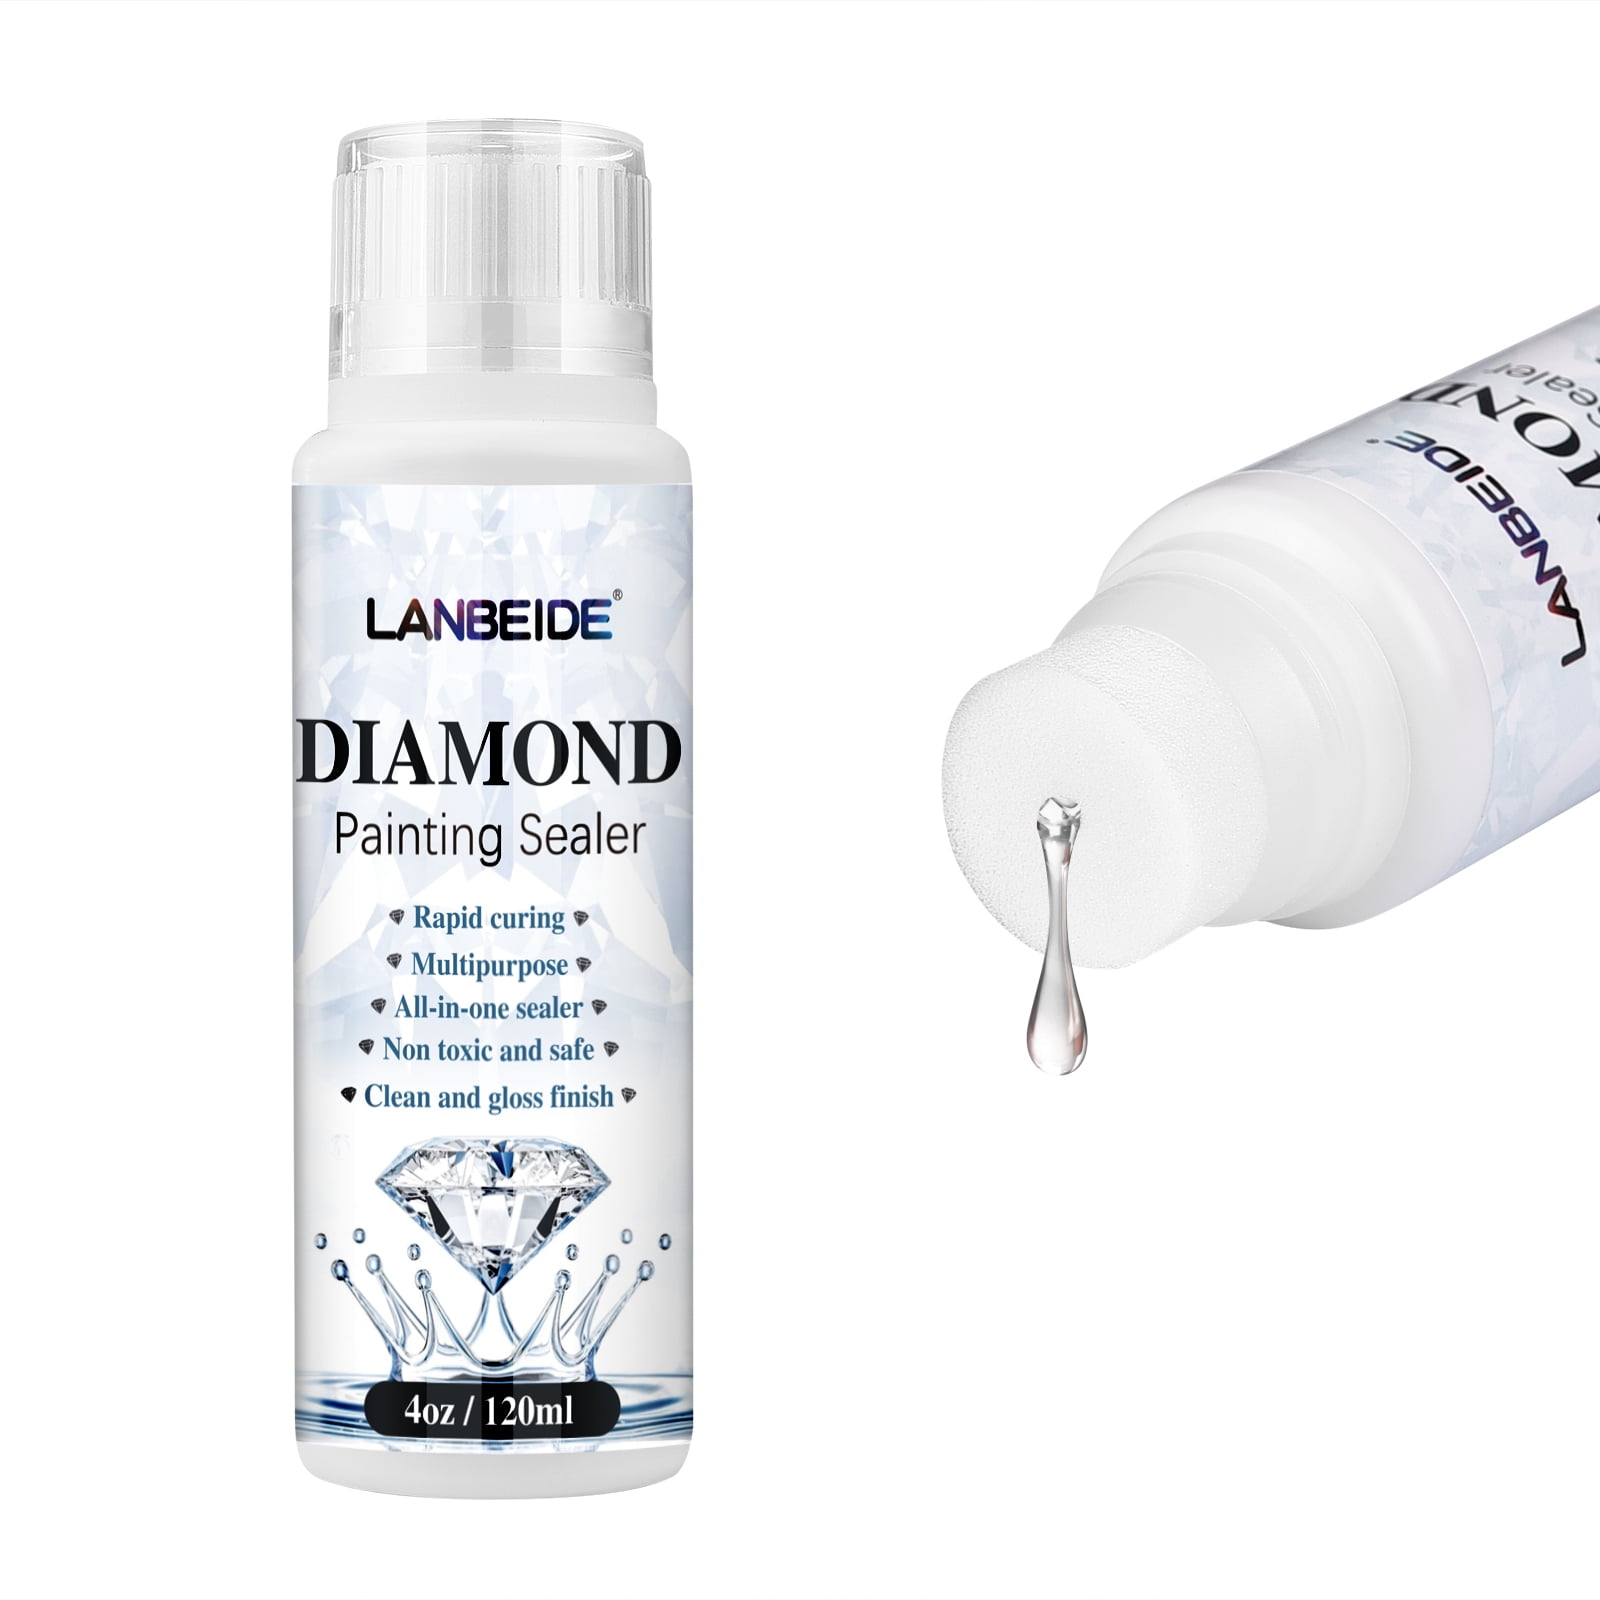 Diamond Dotz 4oz Stick Adhesive Bottle